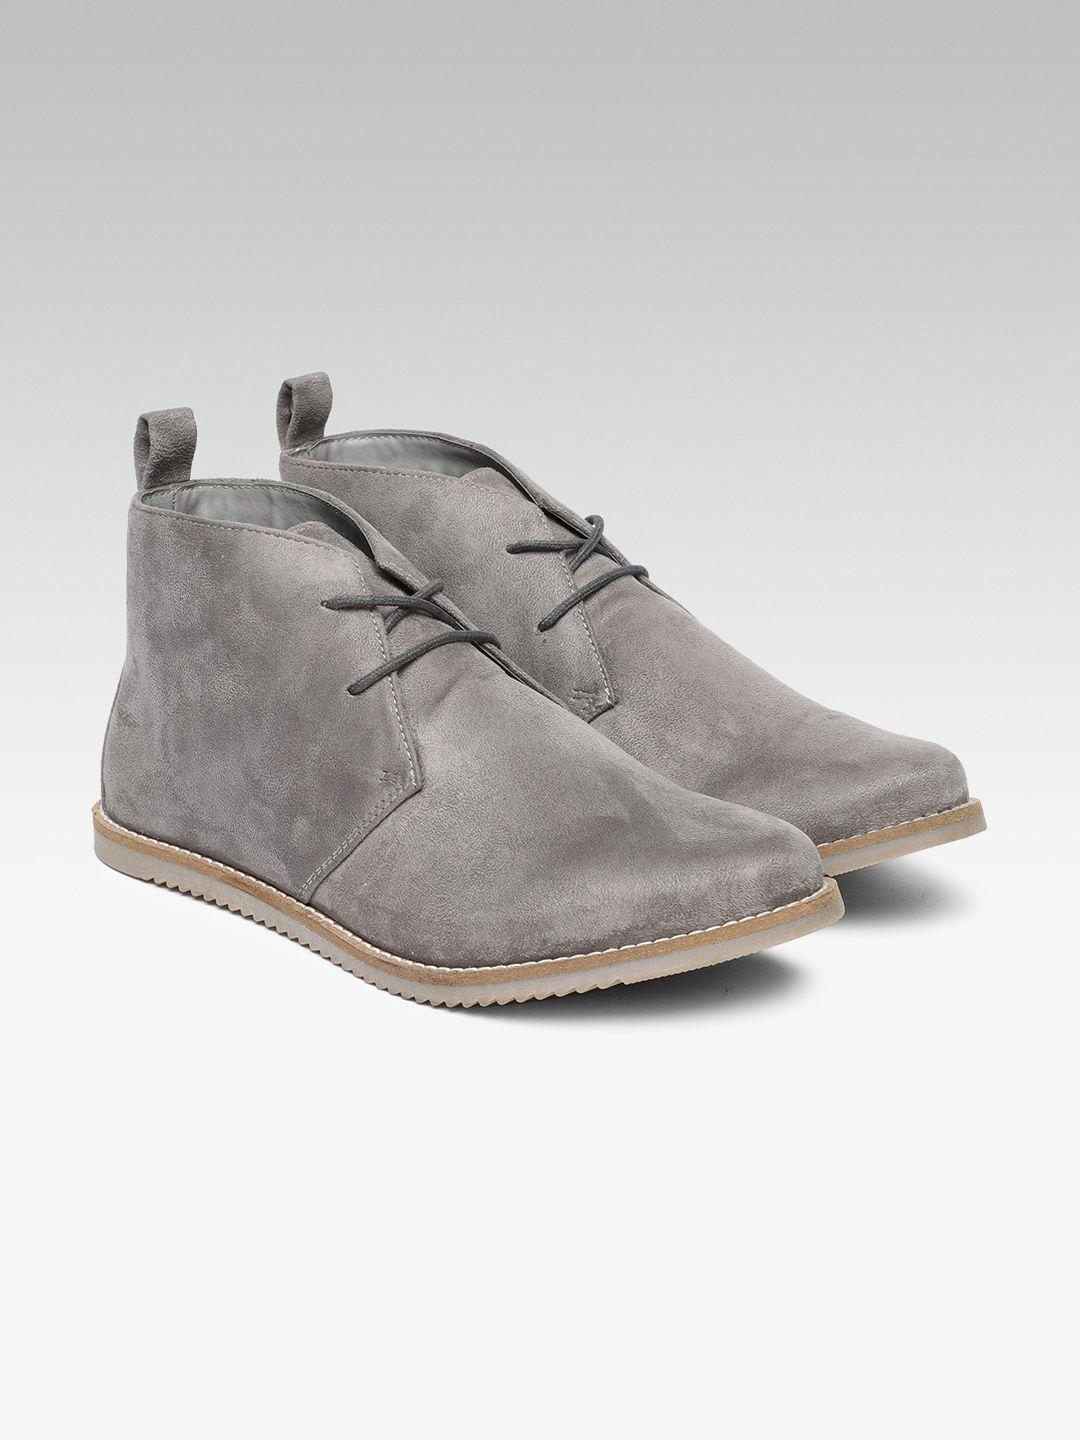 carlton london women grey flat boots